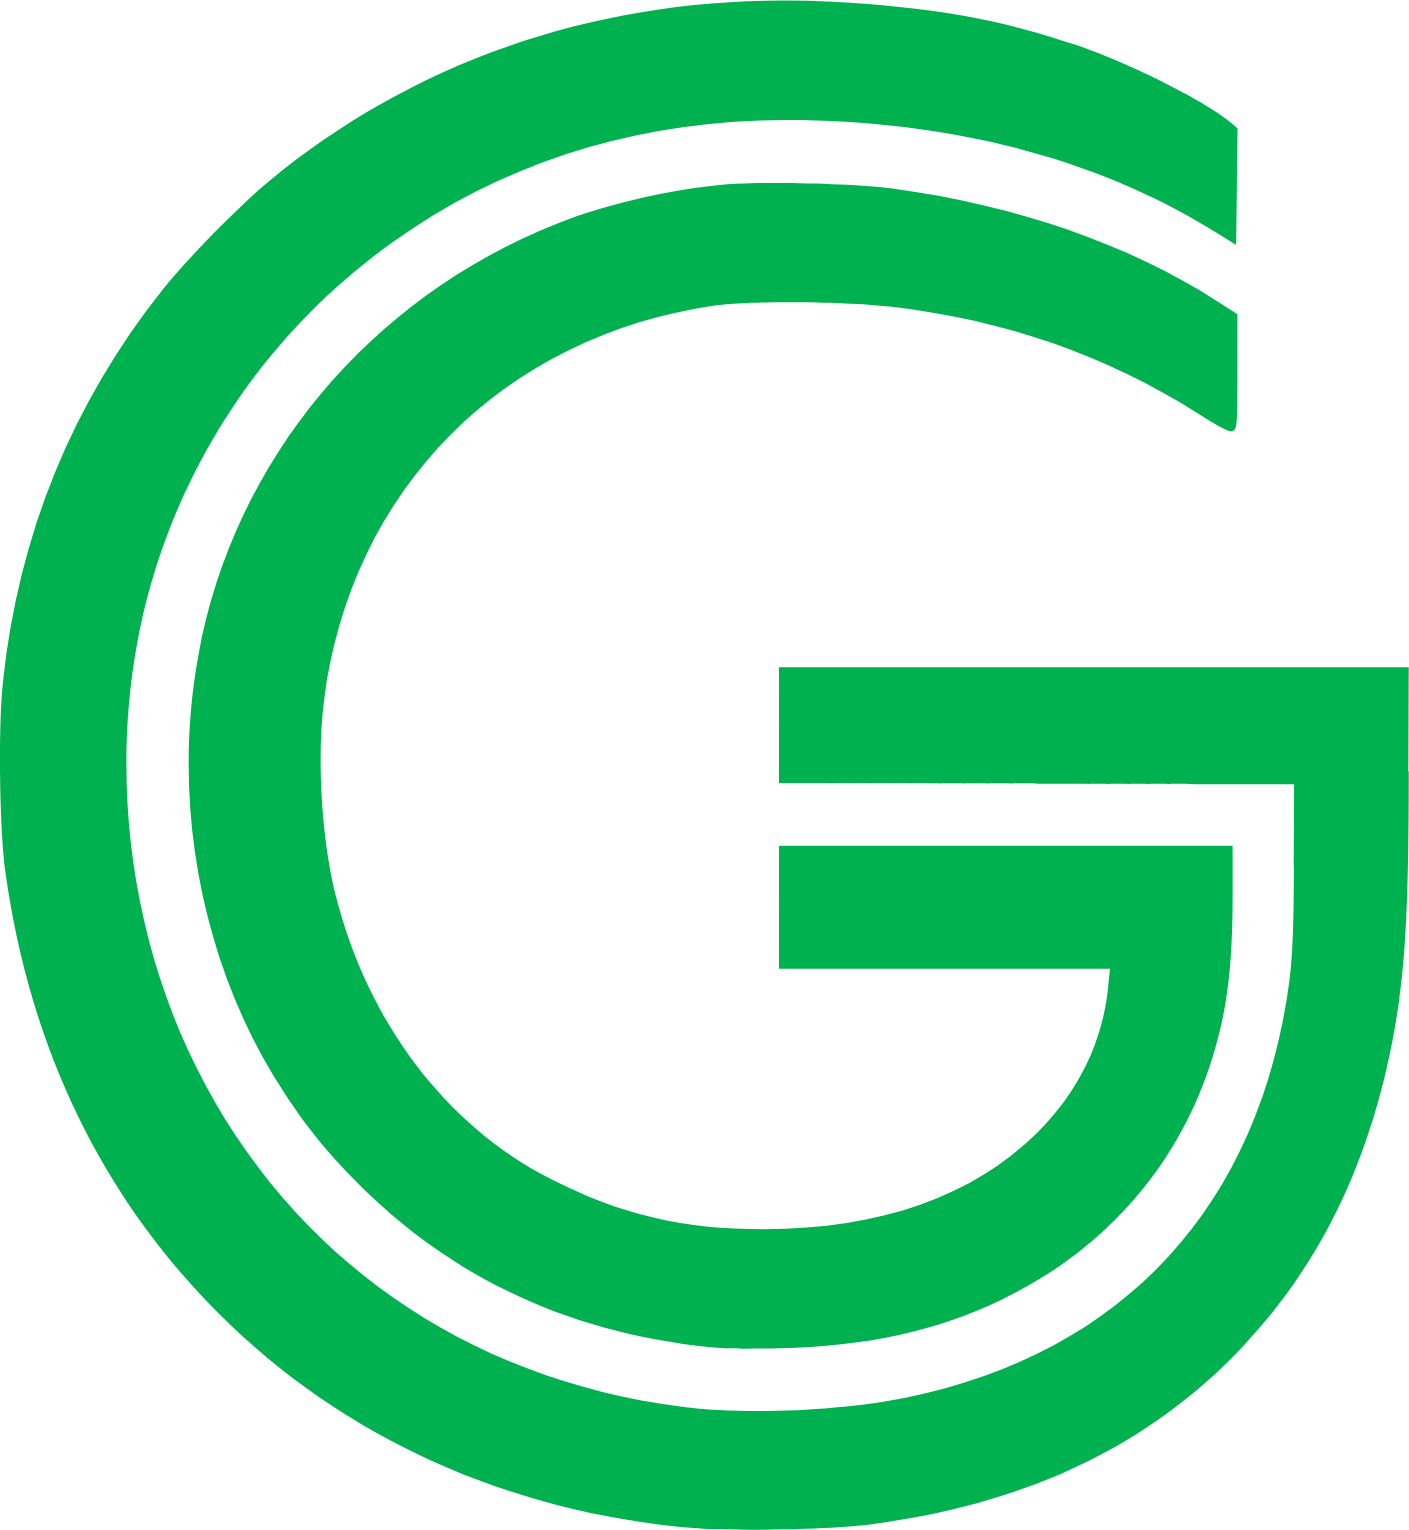 Grab Holdings logo (transparent PNG)